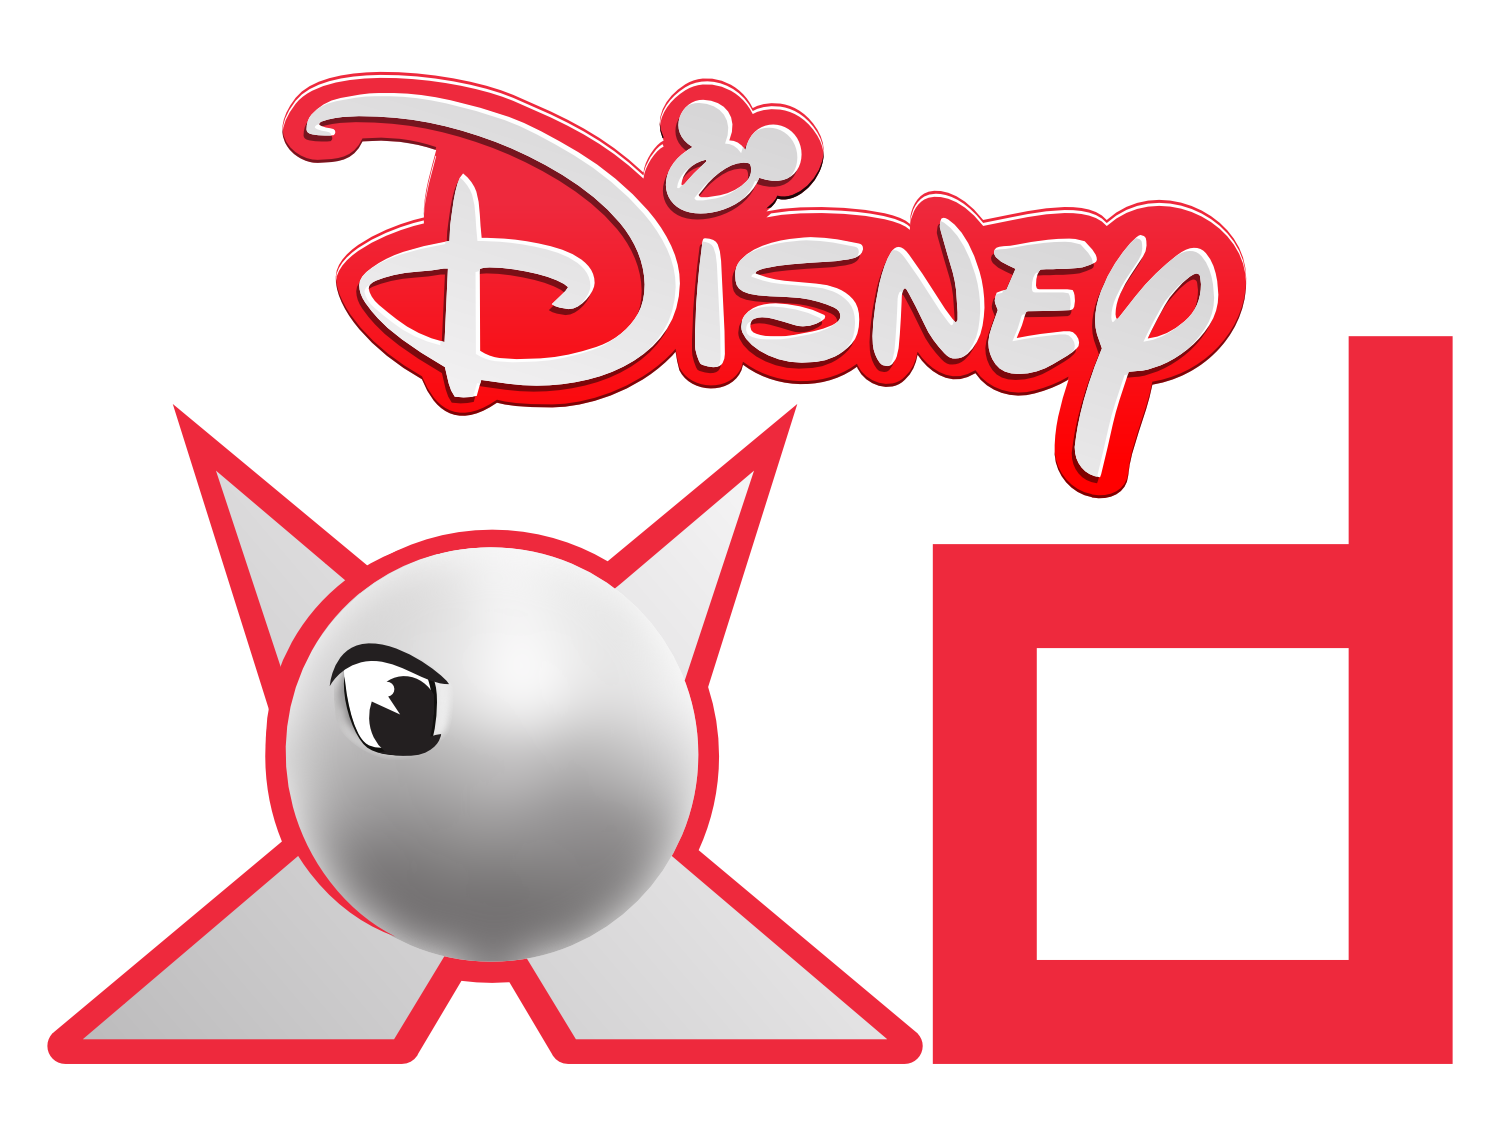 Disney Xd Logo Lde S Next Idea By Decatilde